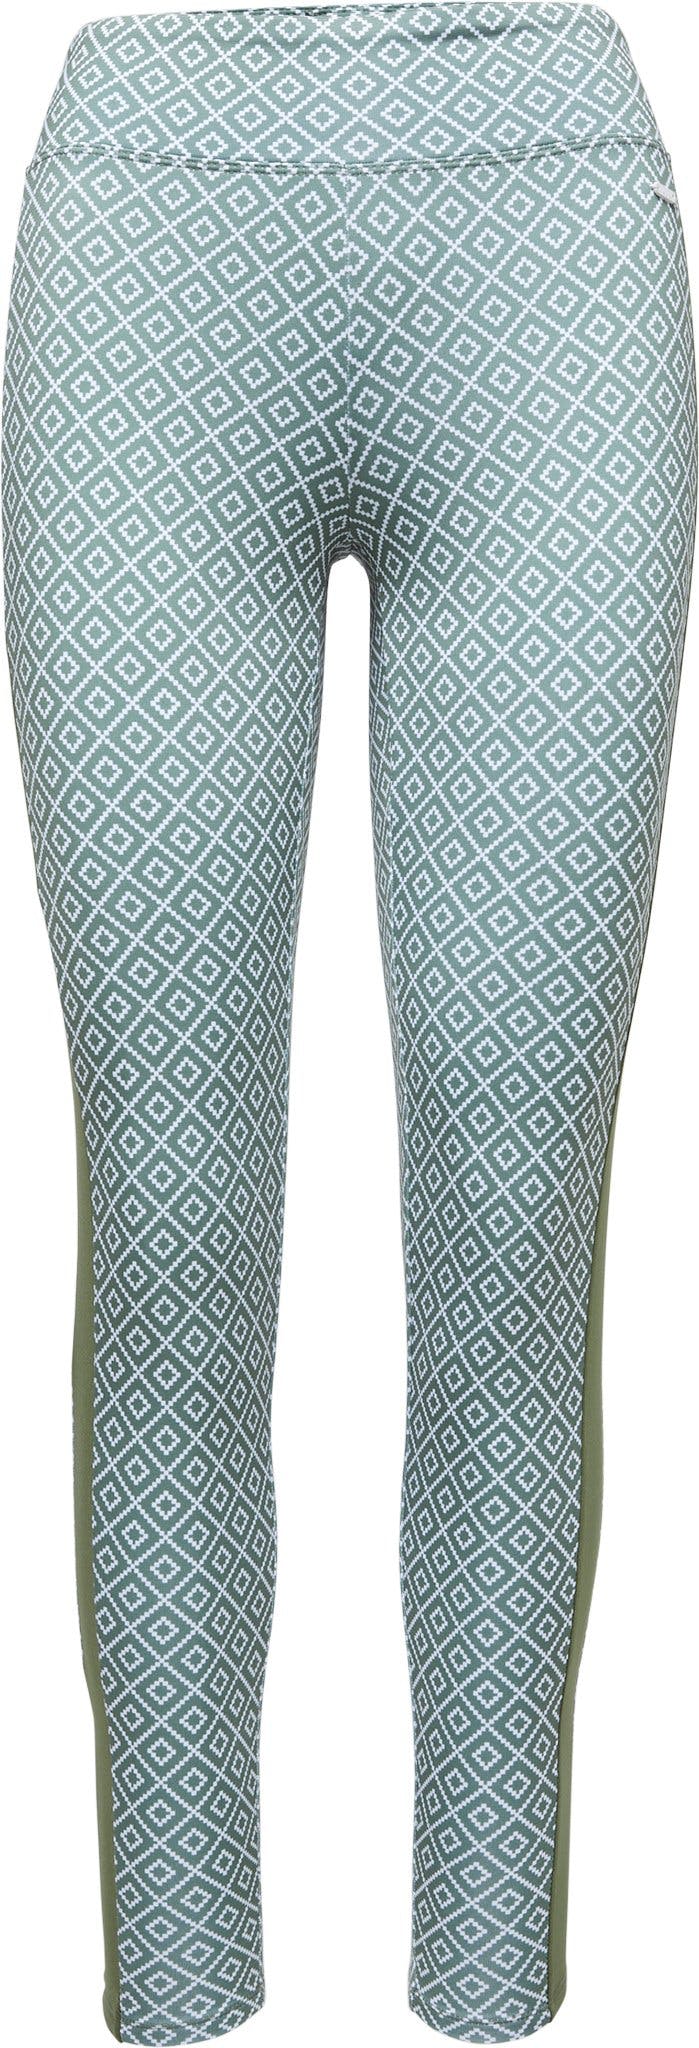 Product gallery image number 1 for product Meribel Elastic Waistband Printed Leggings - Women's